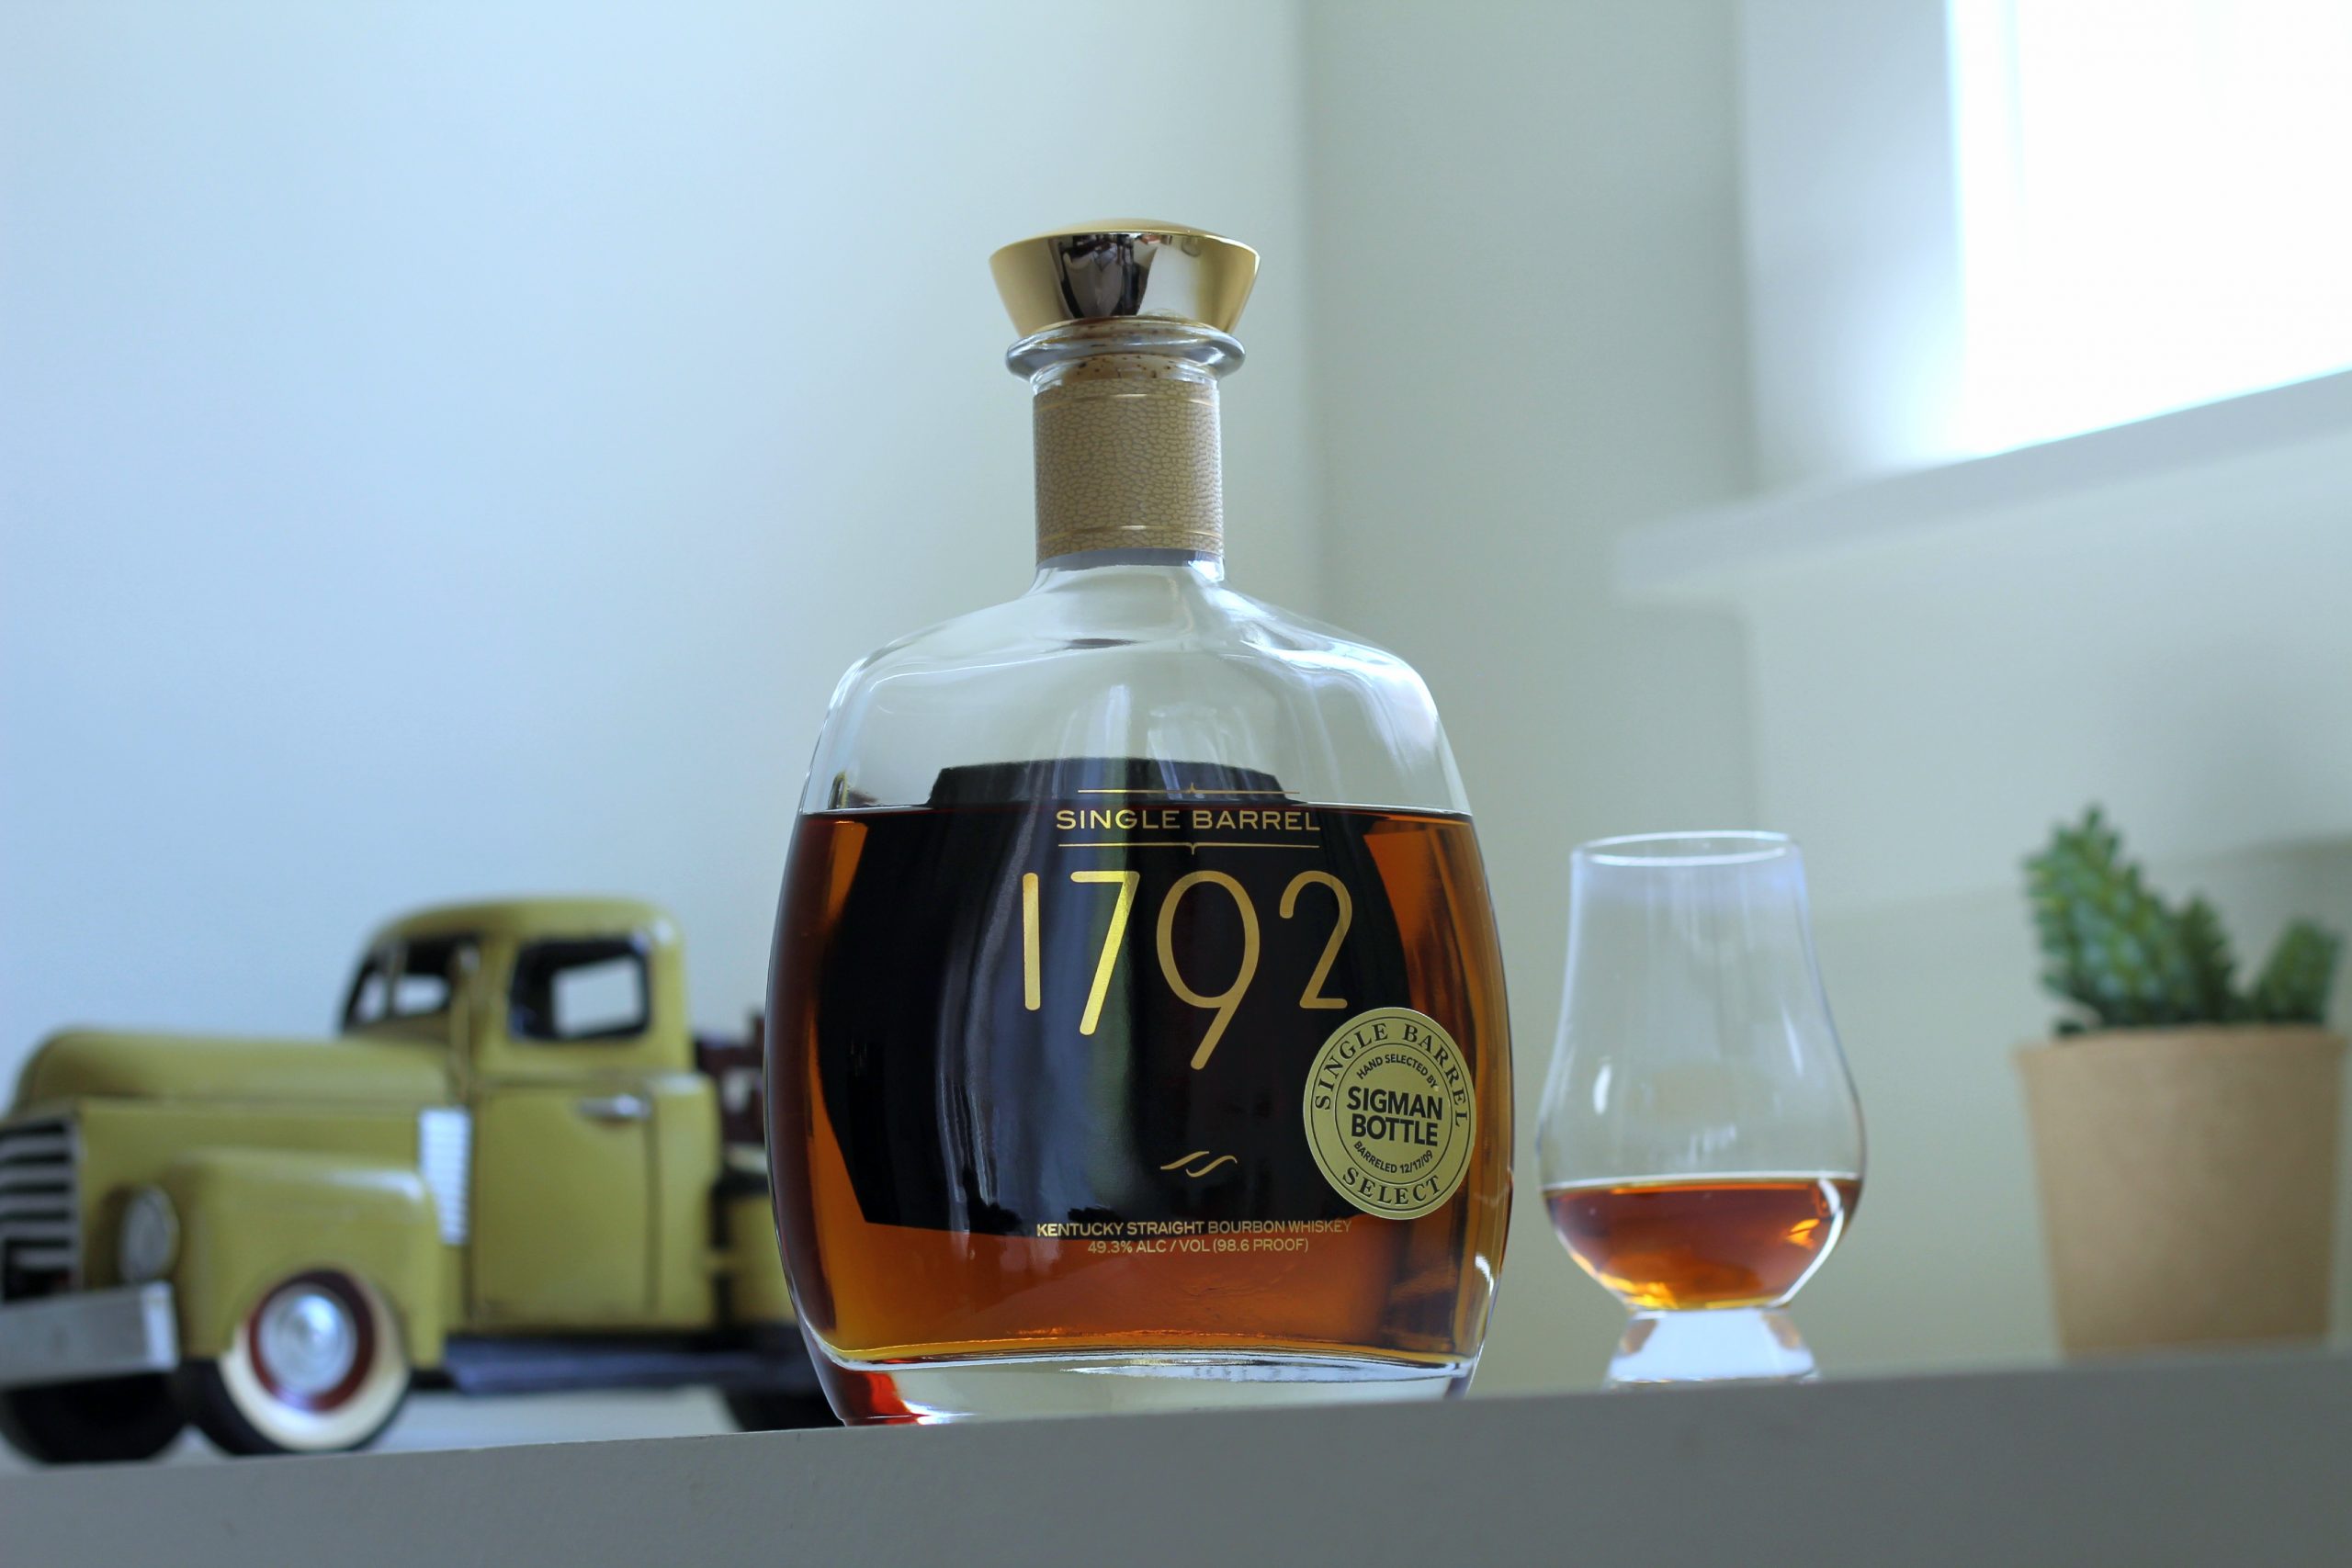 1792 Single Barrel Bourbon (Sigman’s) Review